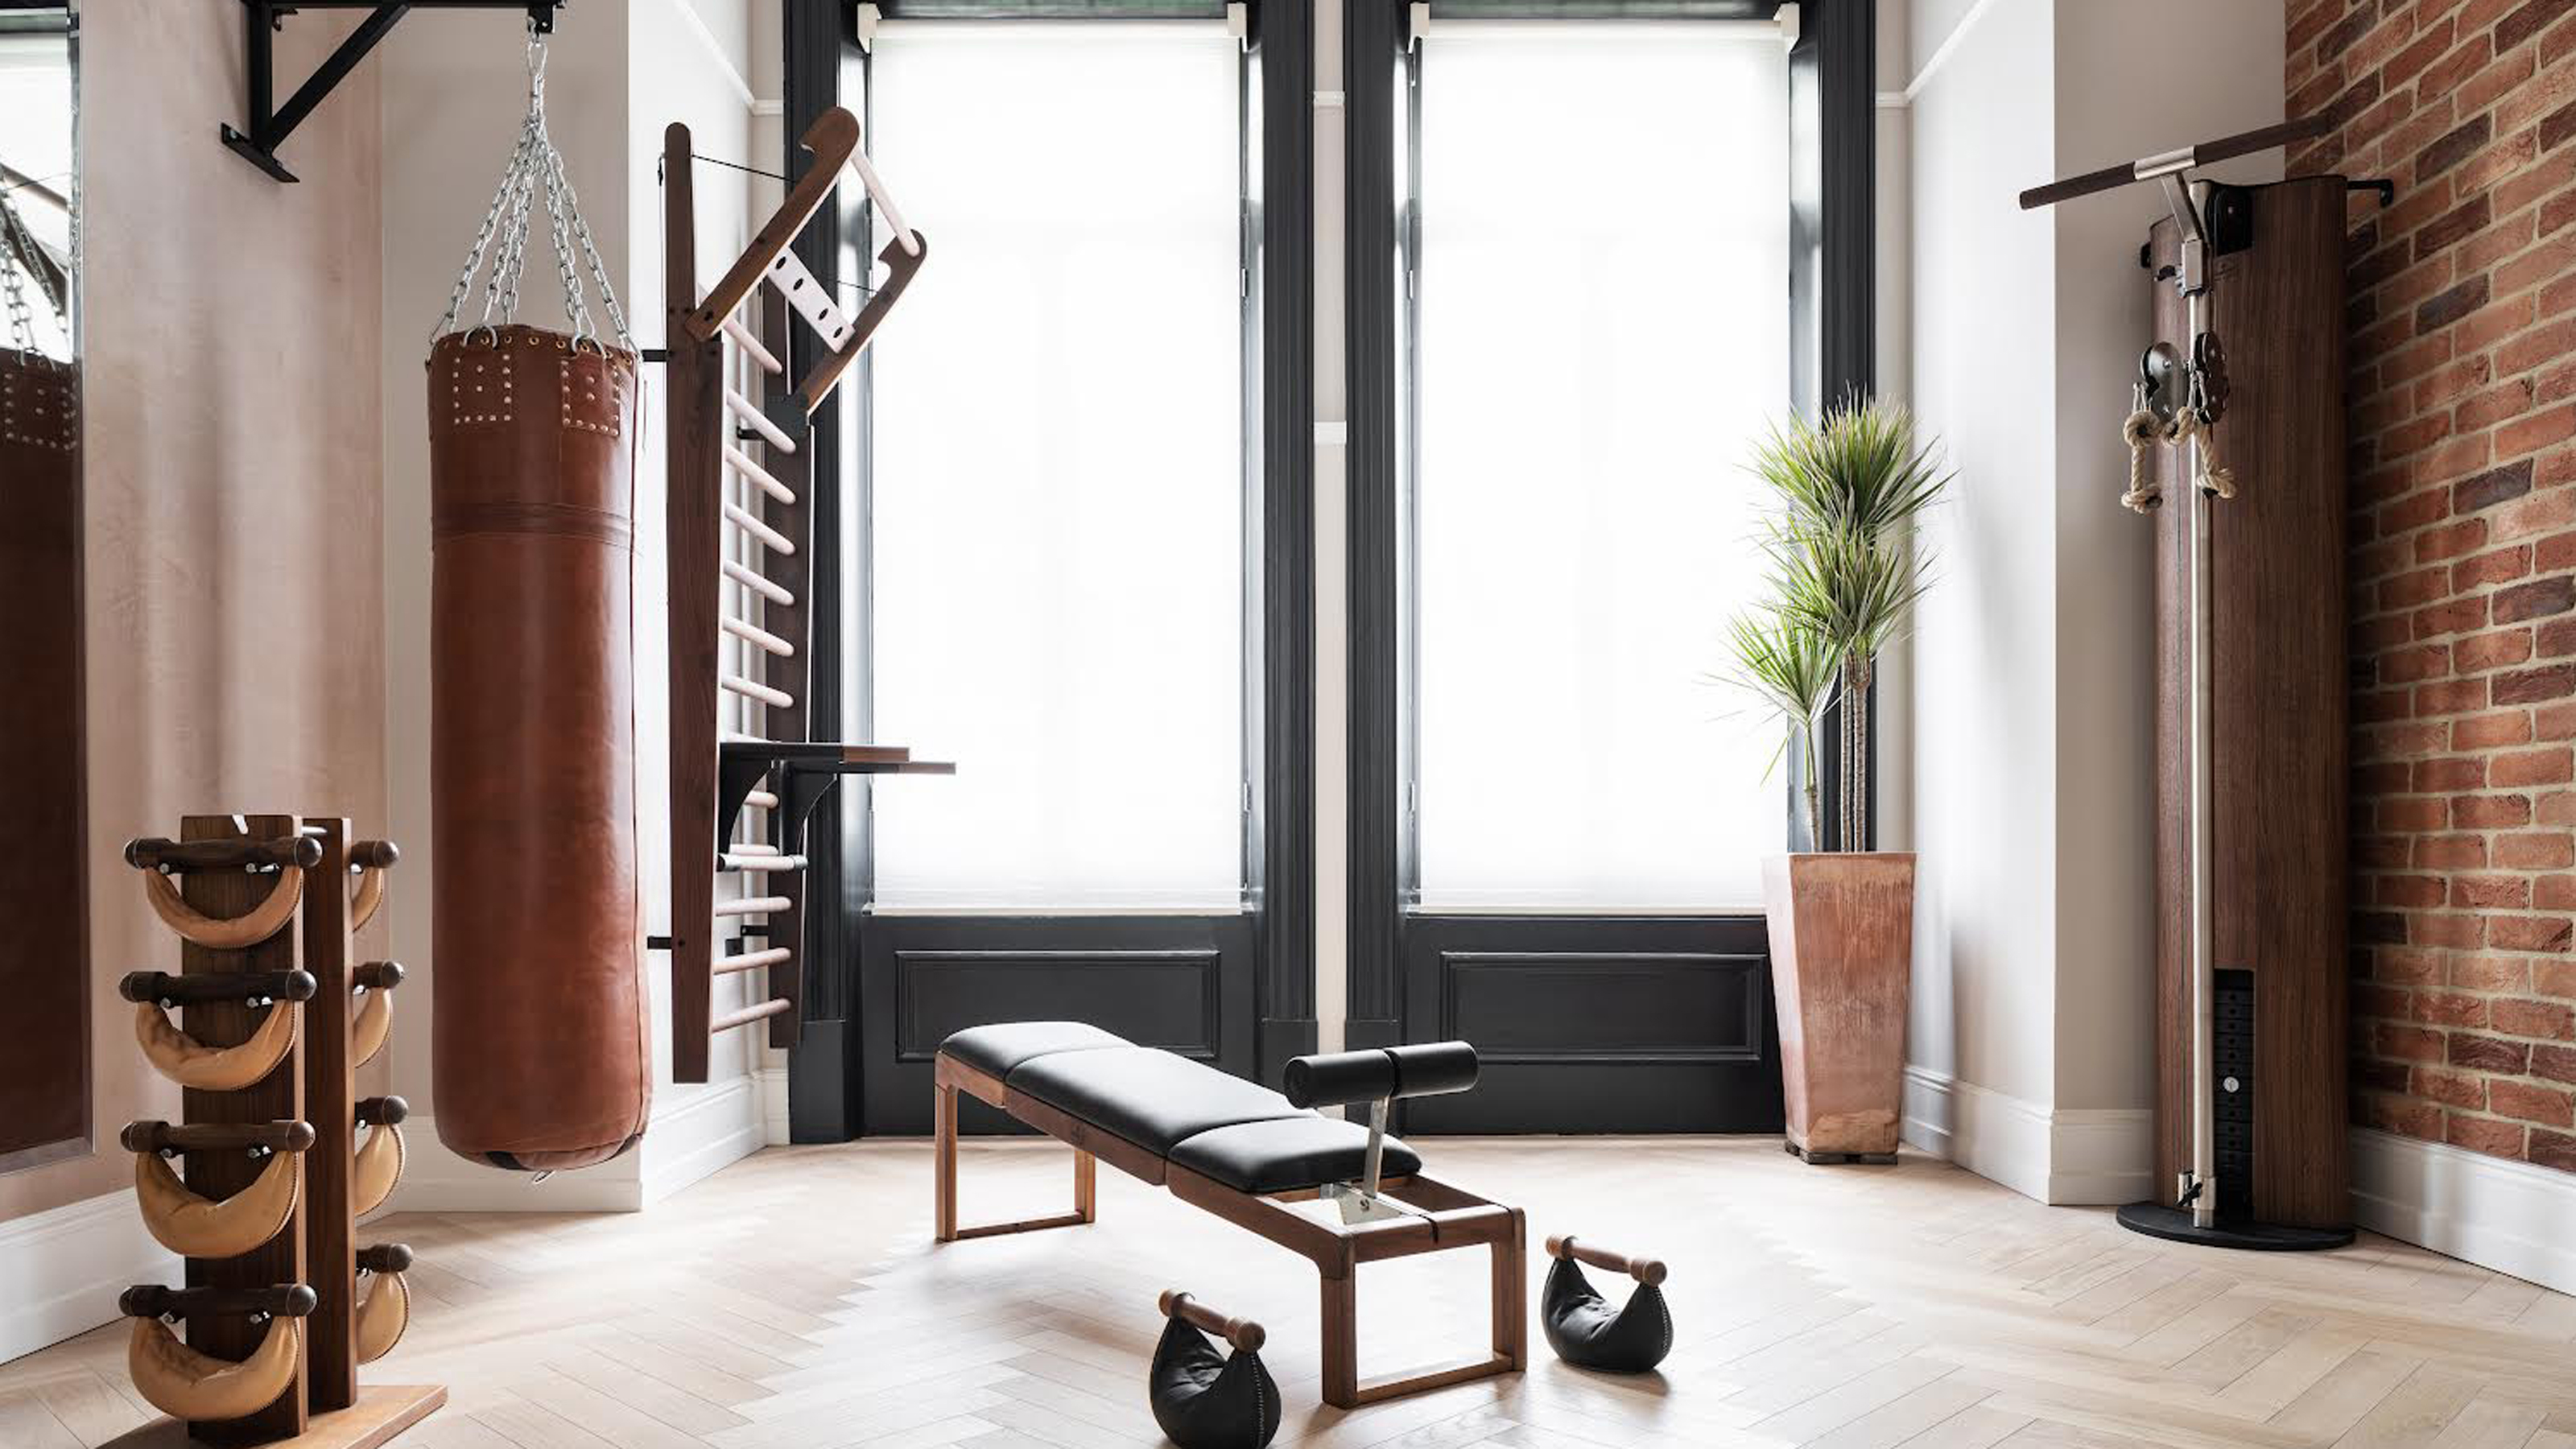 Create a Peloton & Yoga Room at Home - Design Improvised